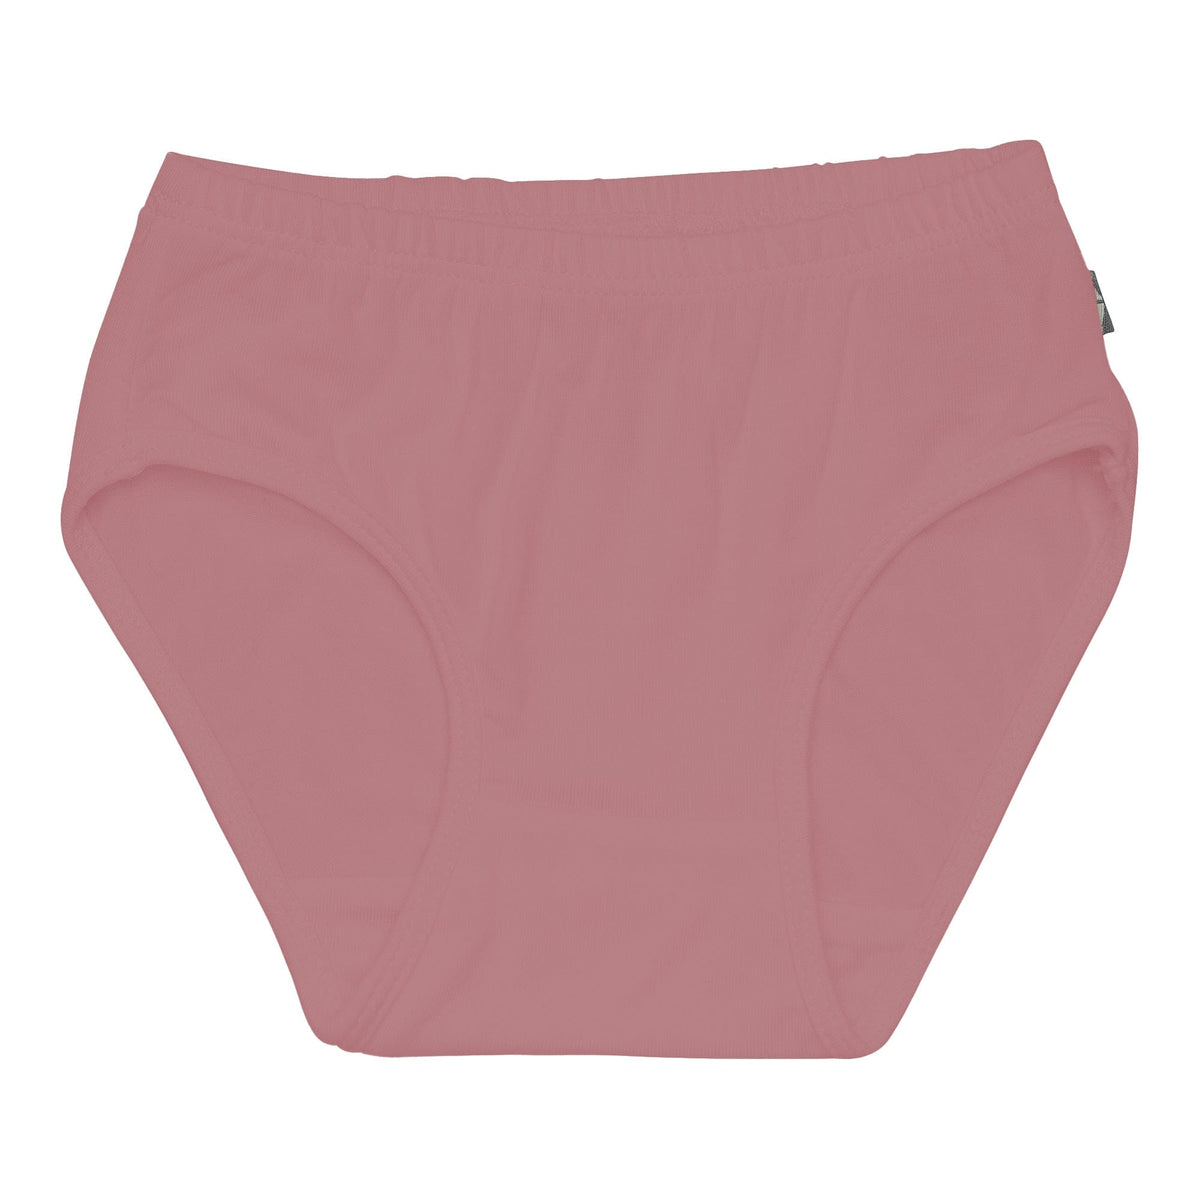 6 Packs Toddler Little Girls Cotton Underwear Briefs Kids Panties  Underpants 2T 3T 4T 5T 6T -  Ireland